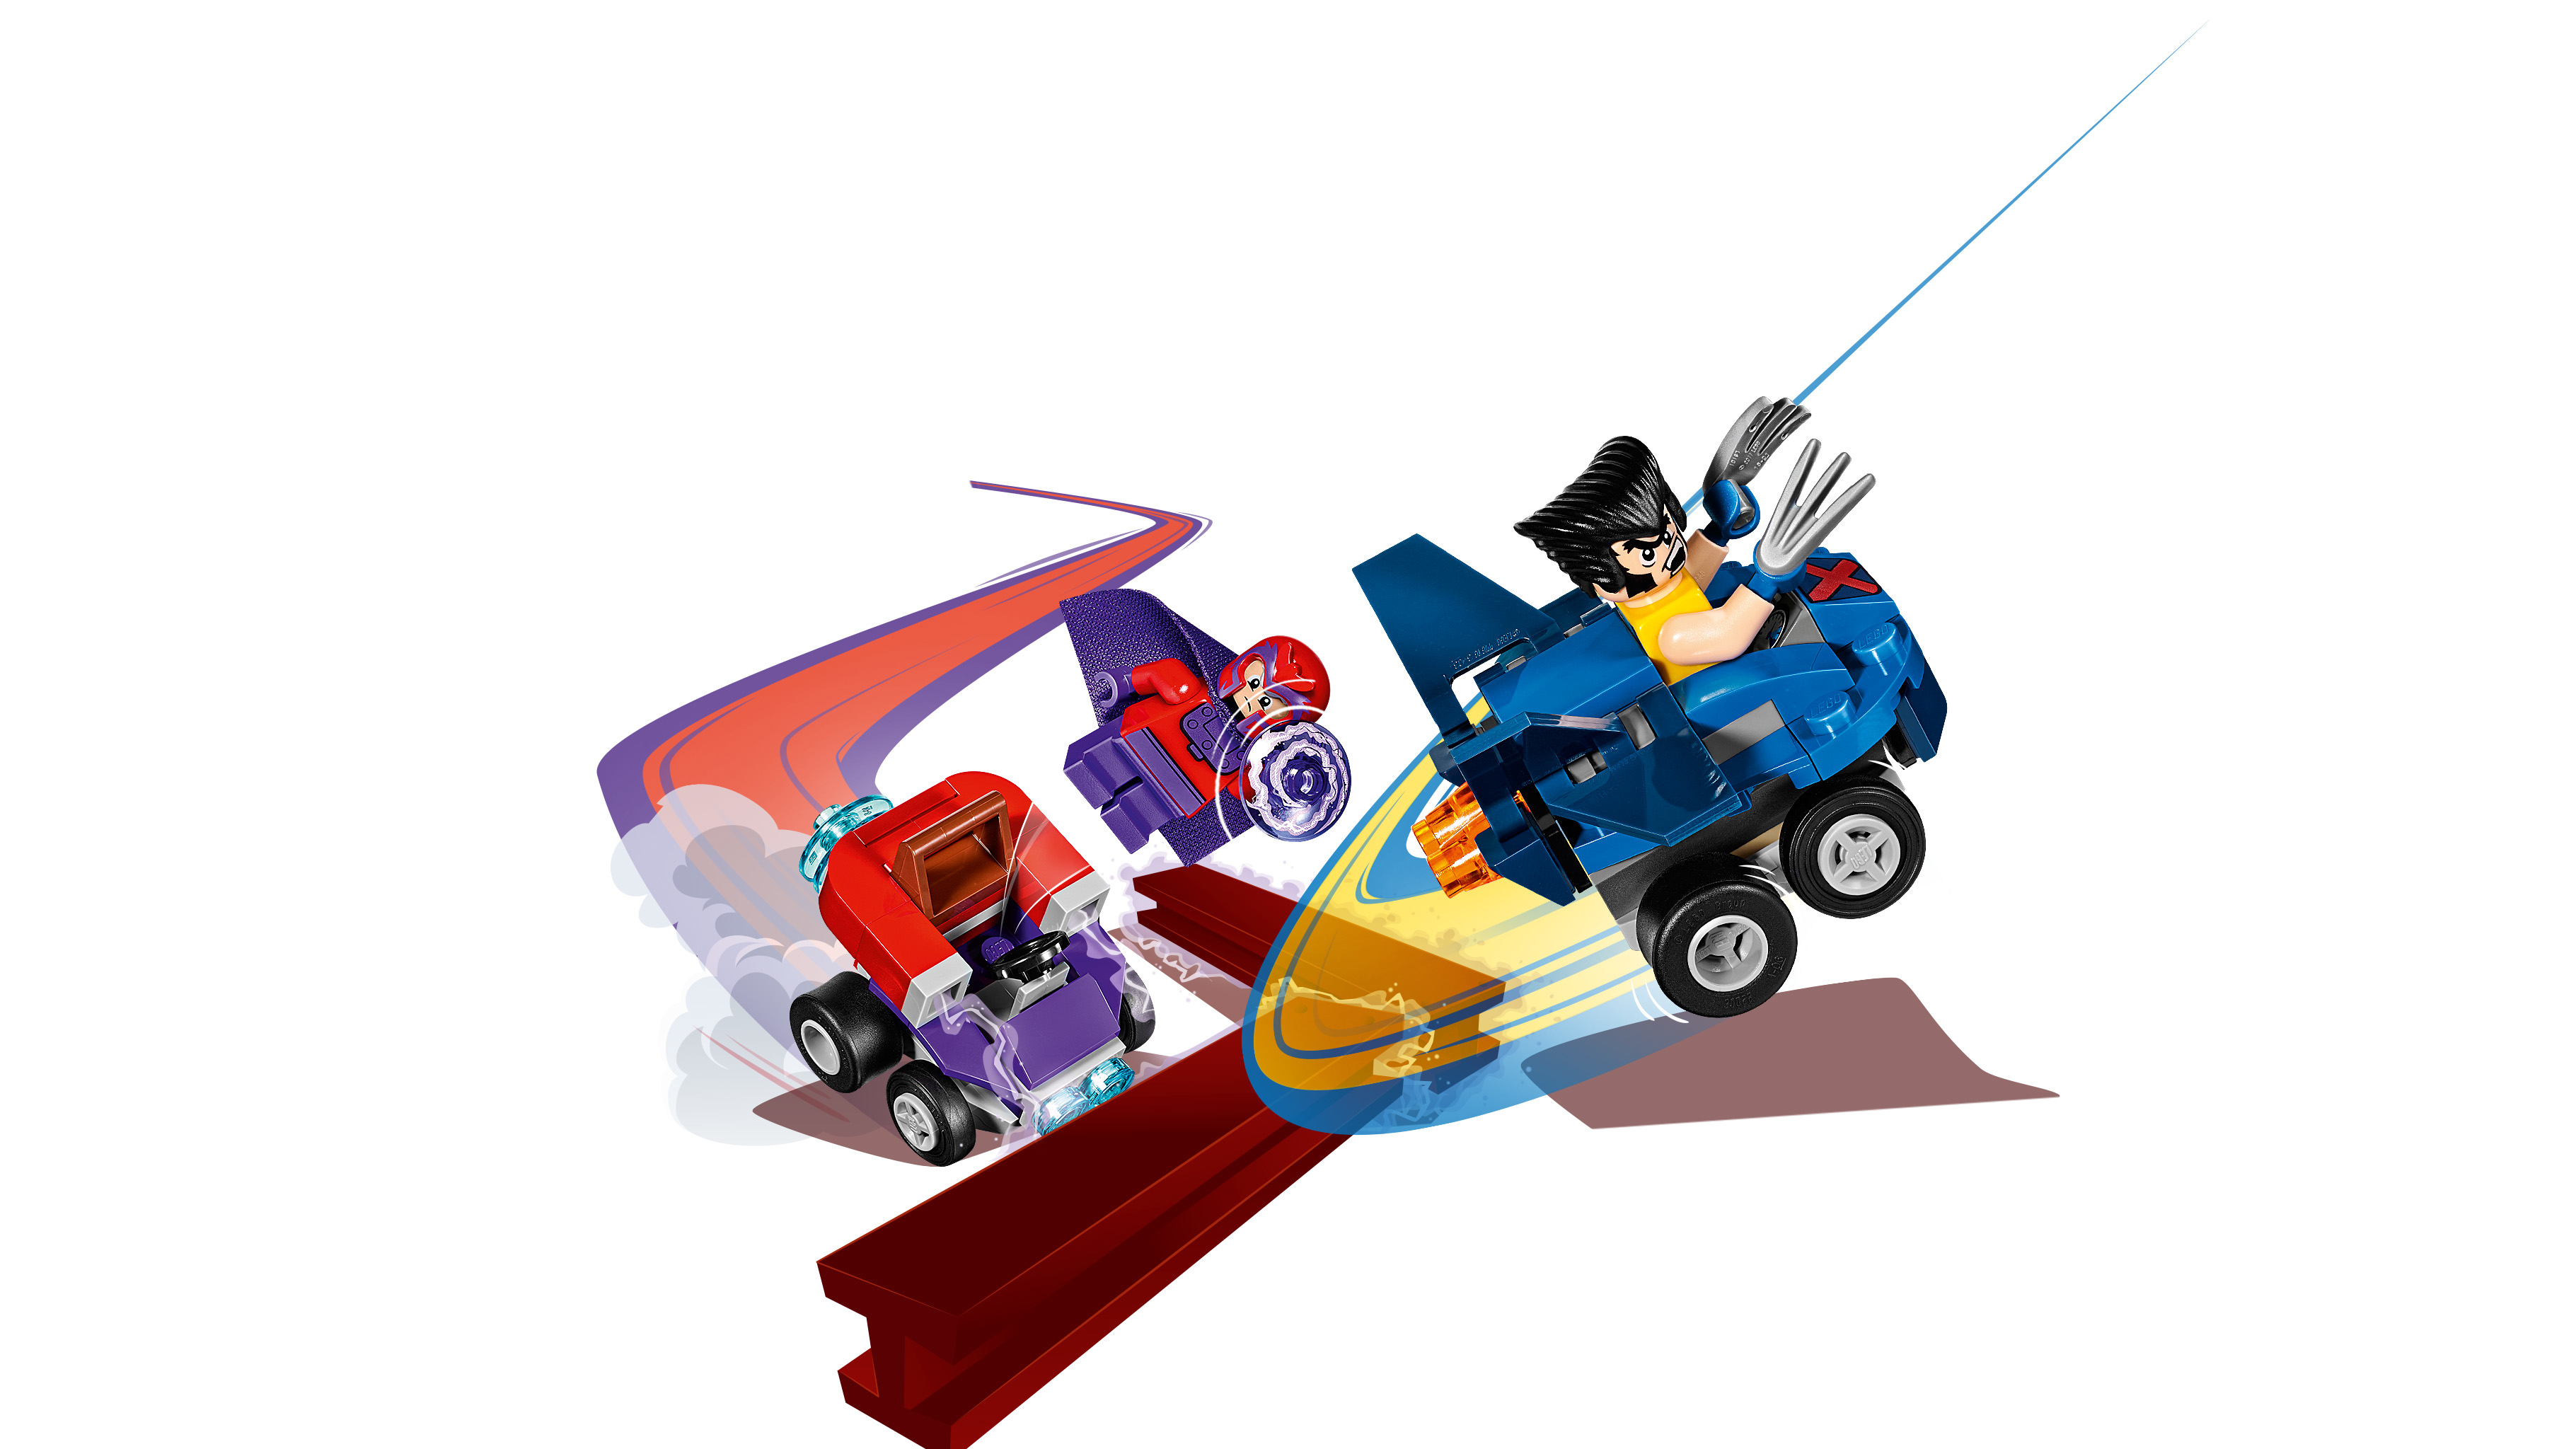 LEGO Marvel Super Heroes Mighty Micros: Wolverine vs. Magneto - 76073